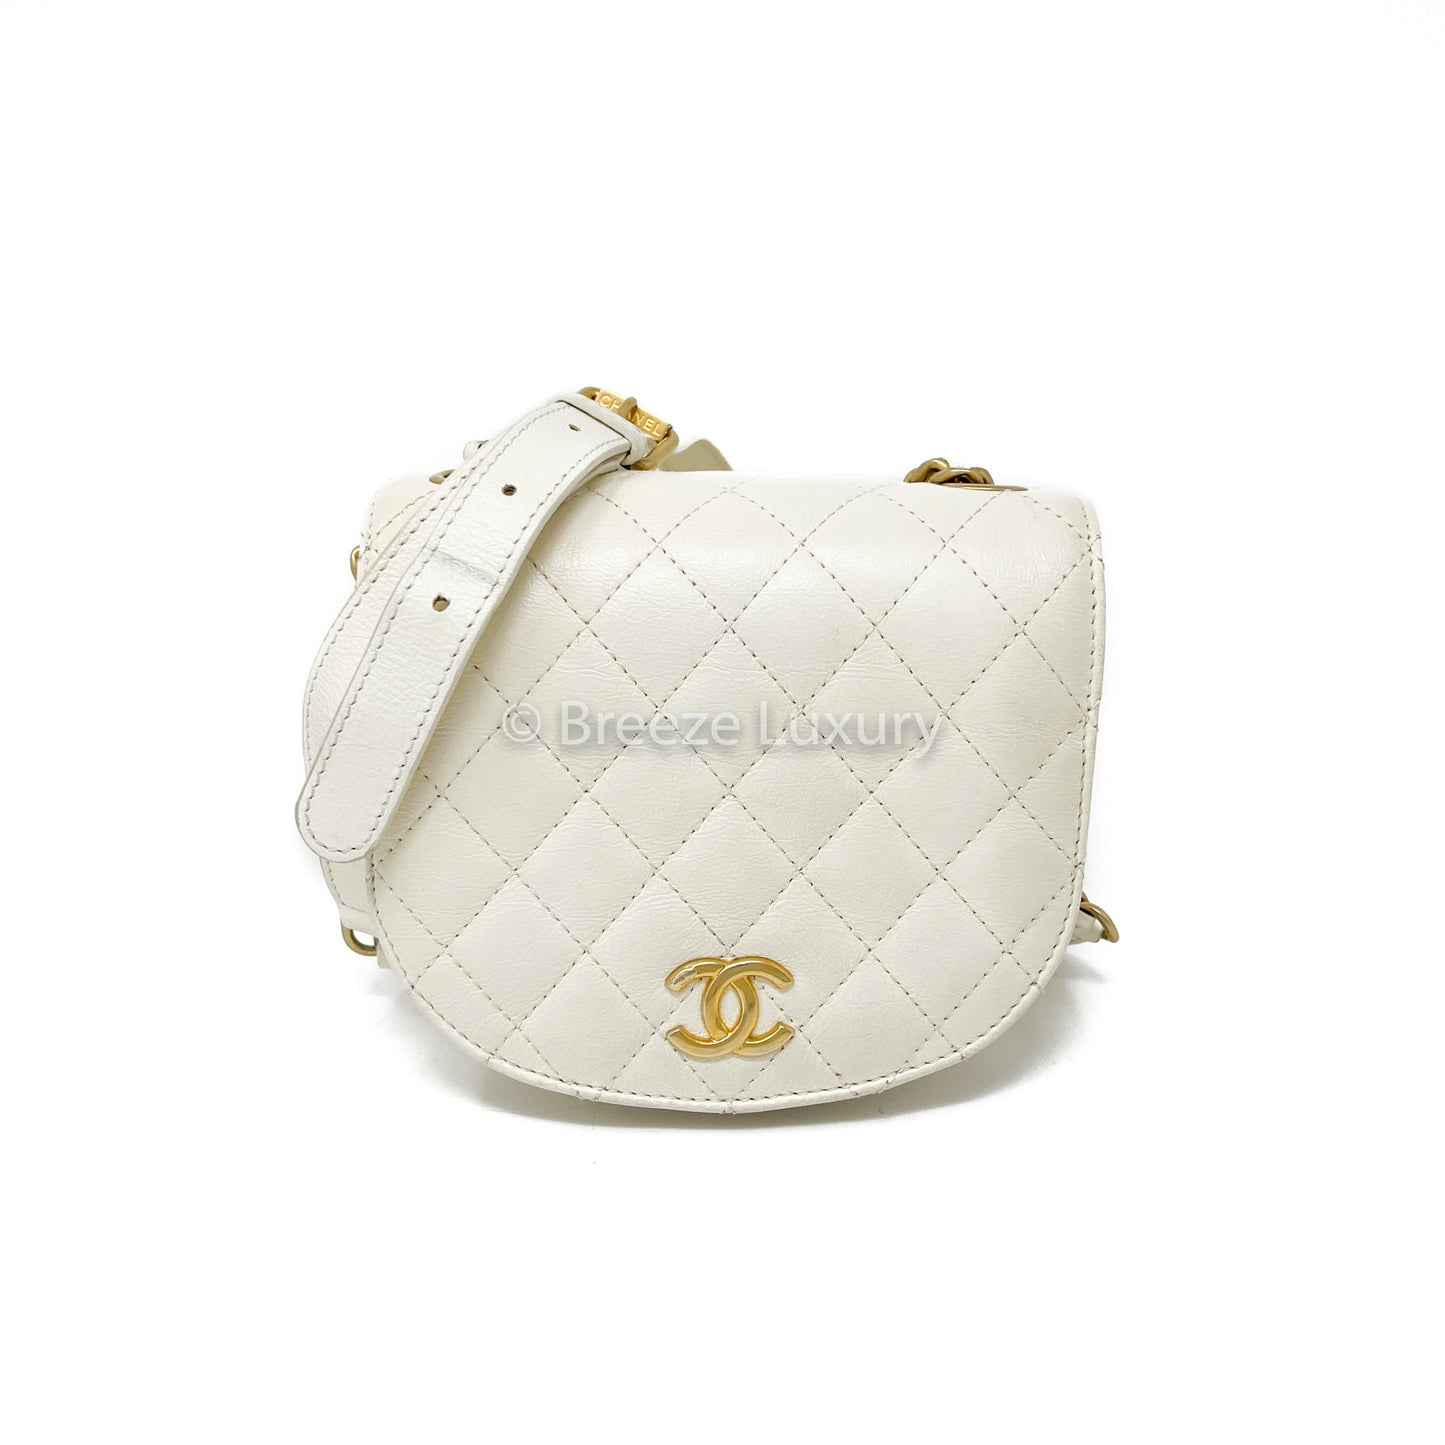 Chanel White Small CC Messenger Flap Bag